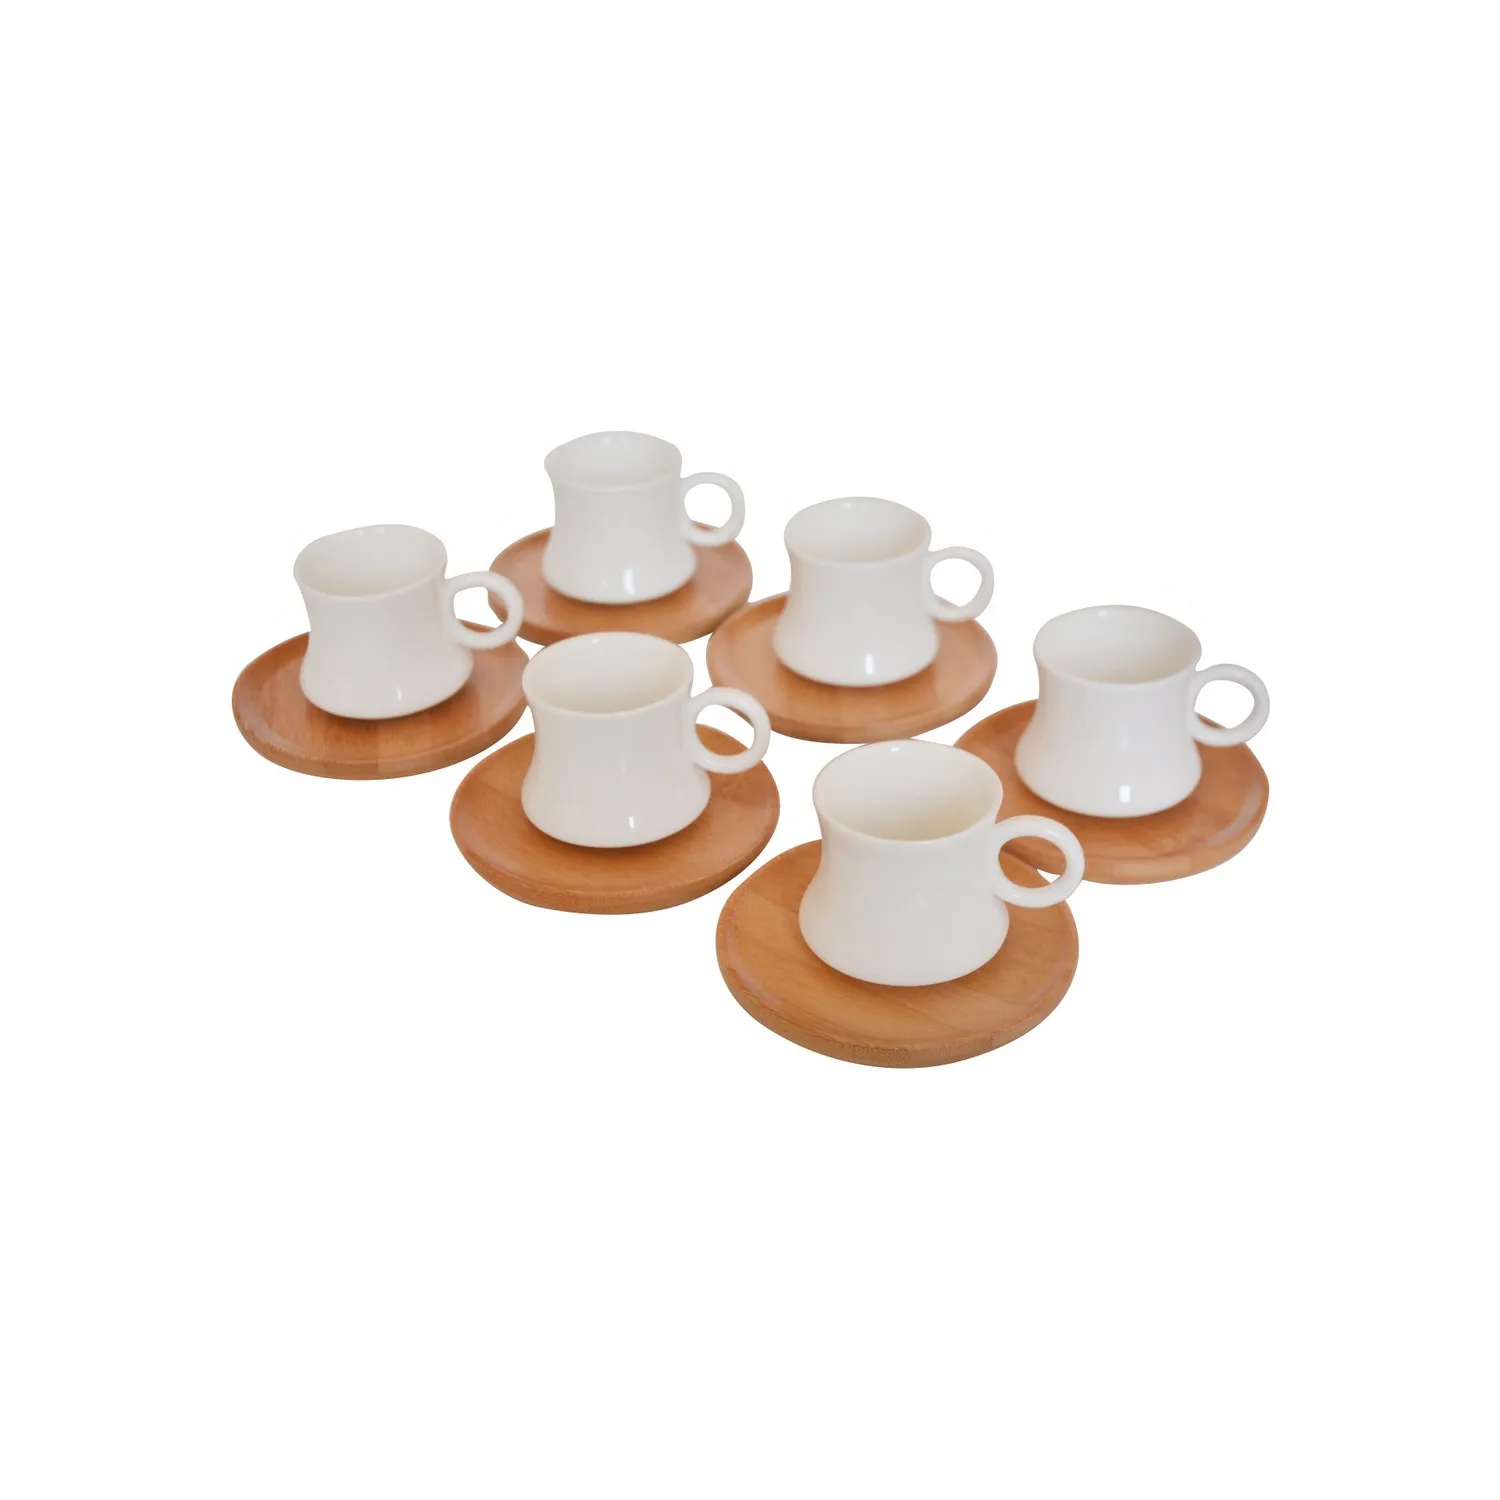 

Espresso Turkısh Greek Coffee Mug Set Colored Glaze Ceramic Cup Home Kitchen Accessories Drinkware White Bamboo Plate Saucer